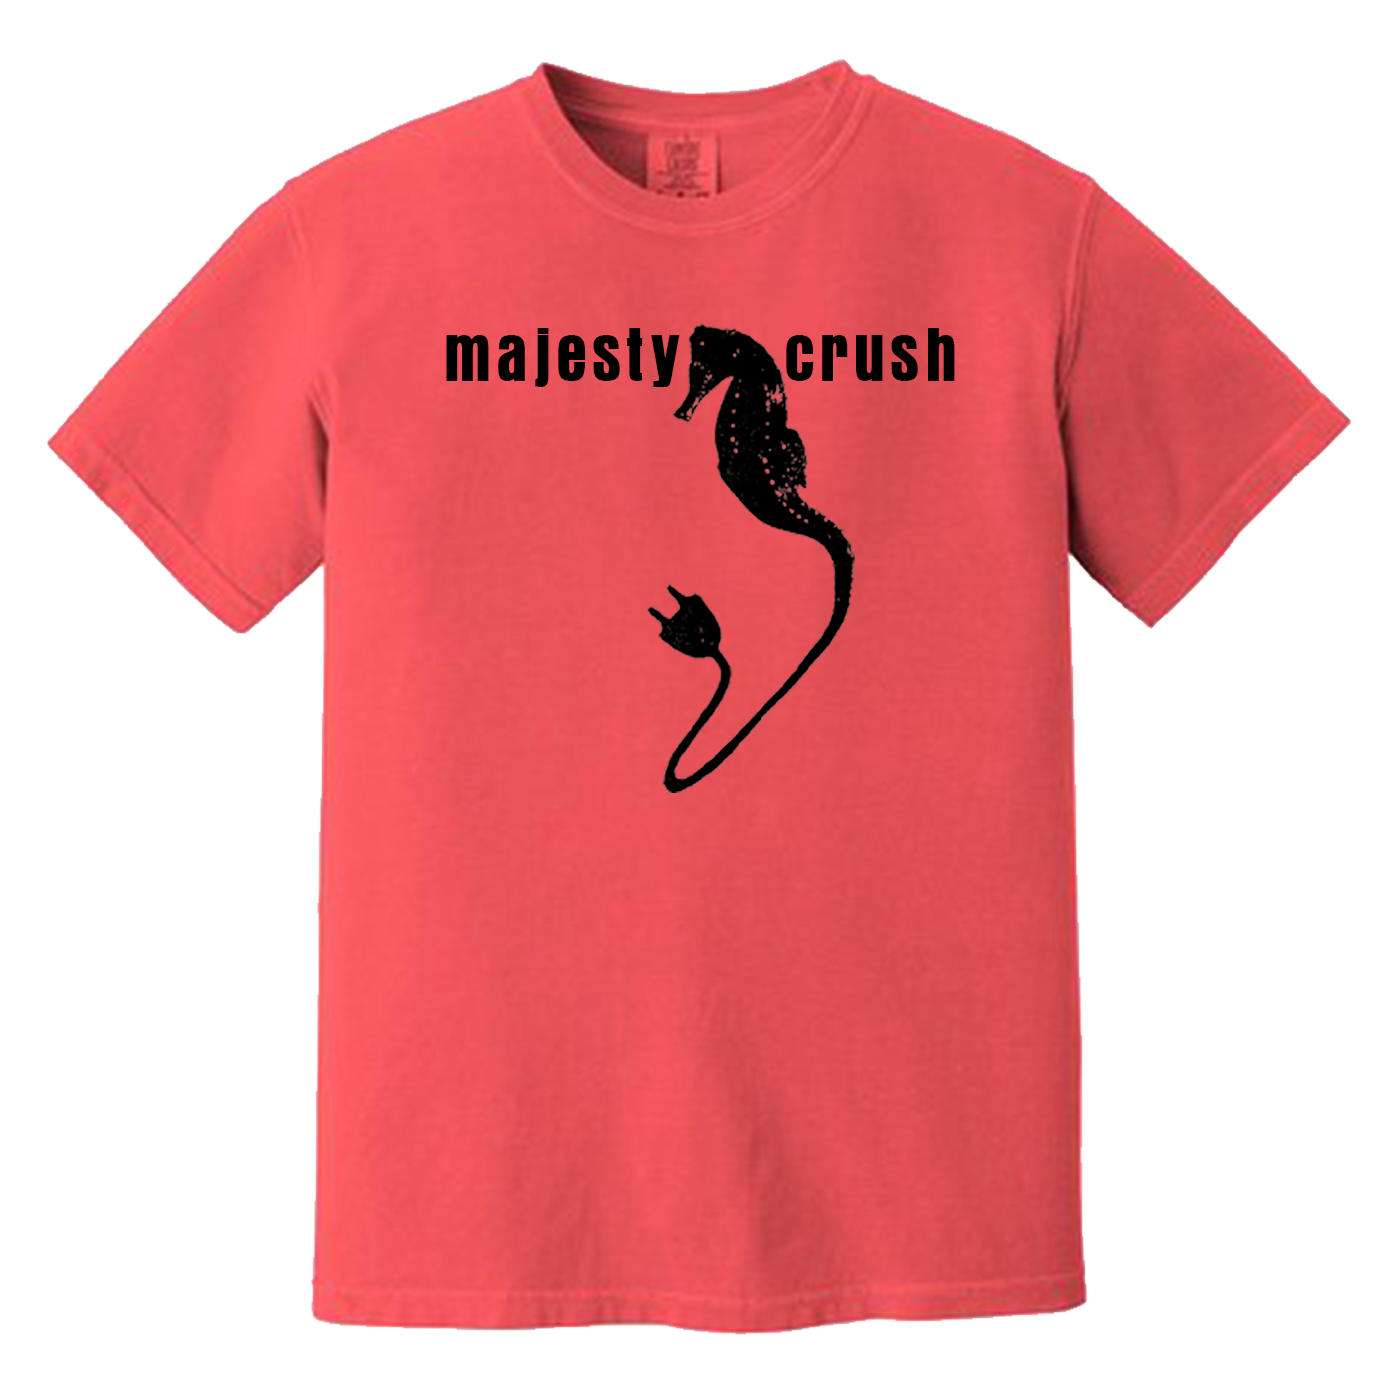 Seahorse T-Shirt